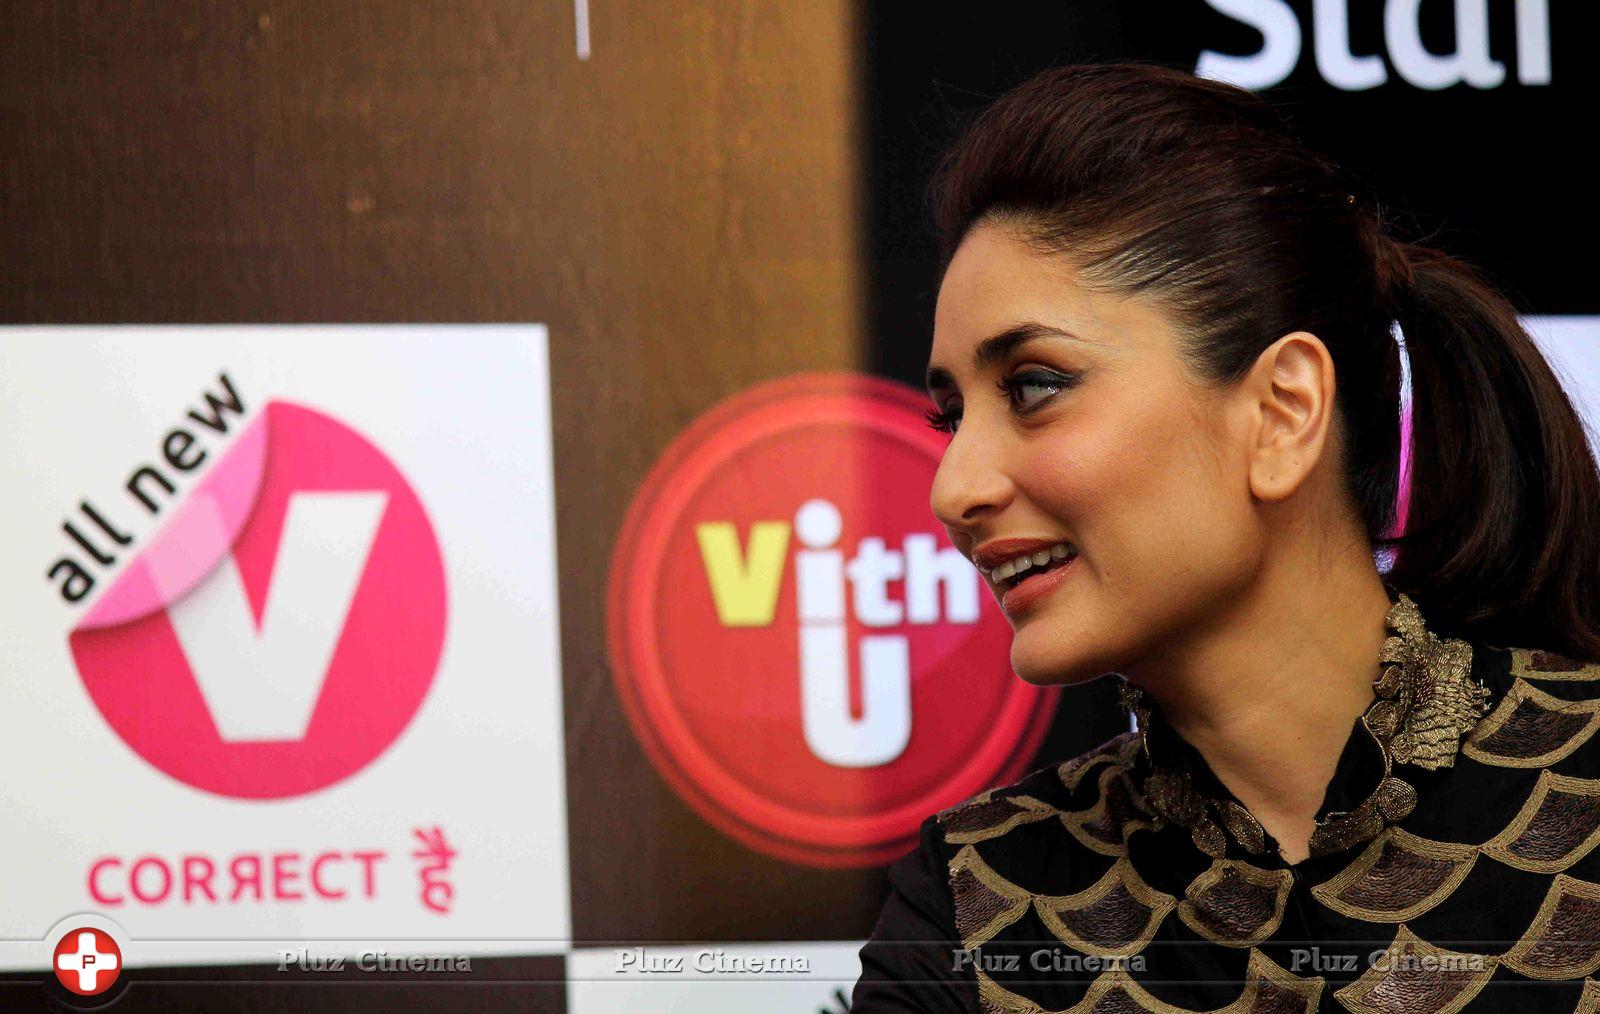 Kareena Kapoor - Kareena Kapoor Promotes VithU Mobile App Photos | Picture 683025